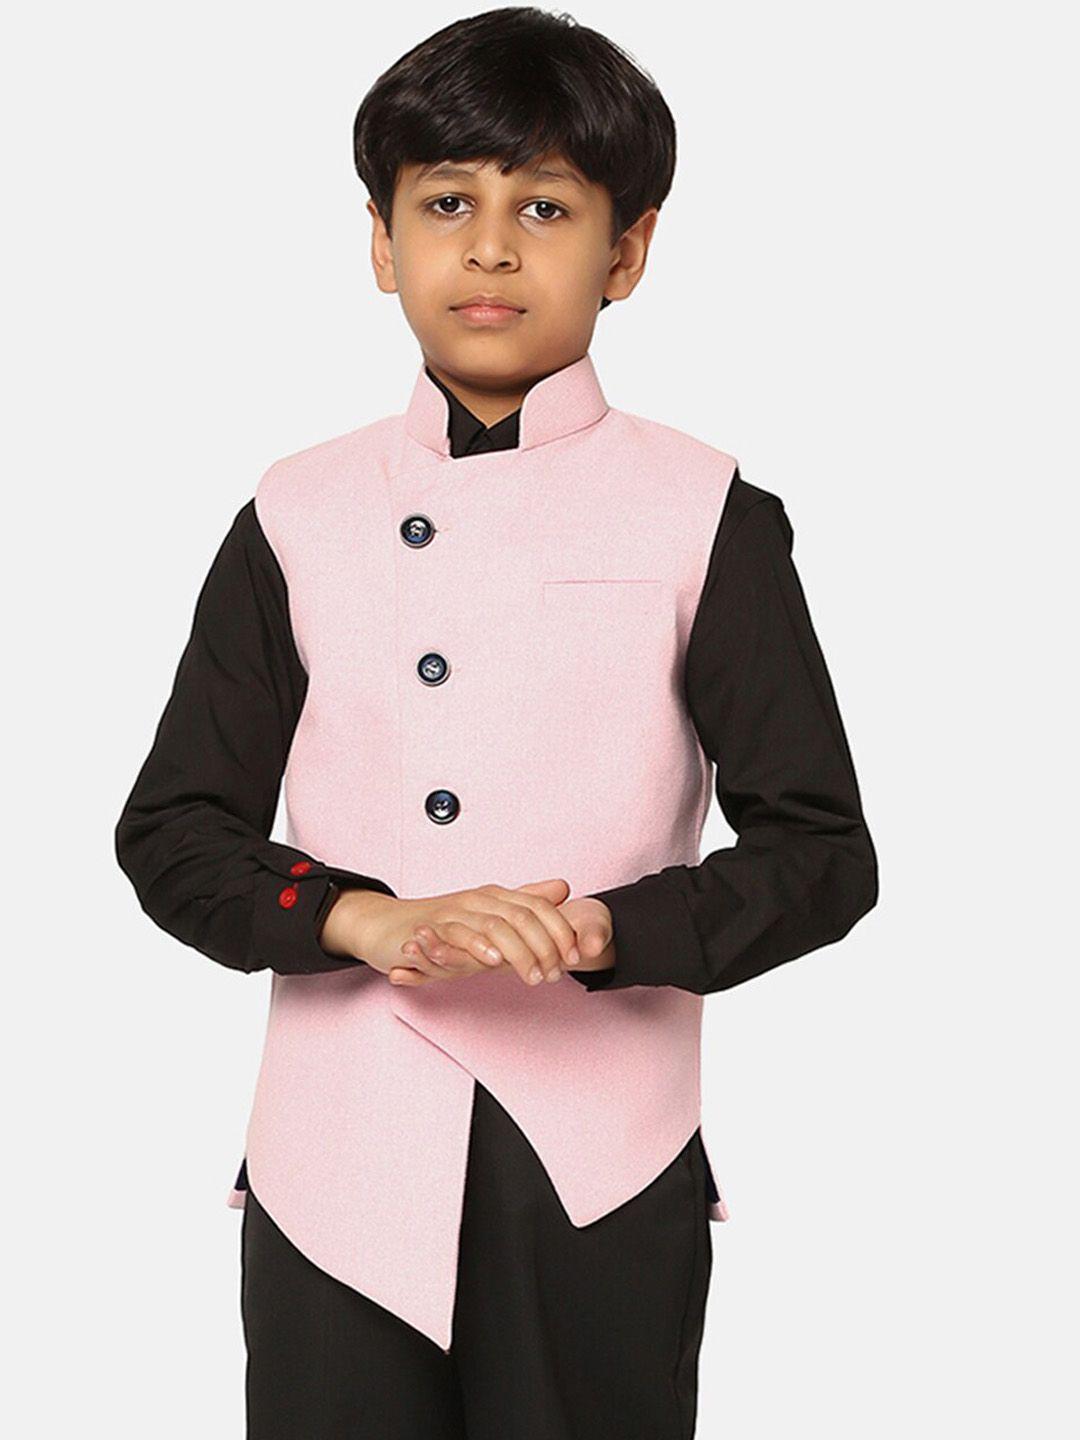 tahvo boys moisture absorbent angrakha nehru jacket